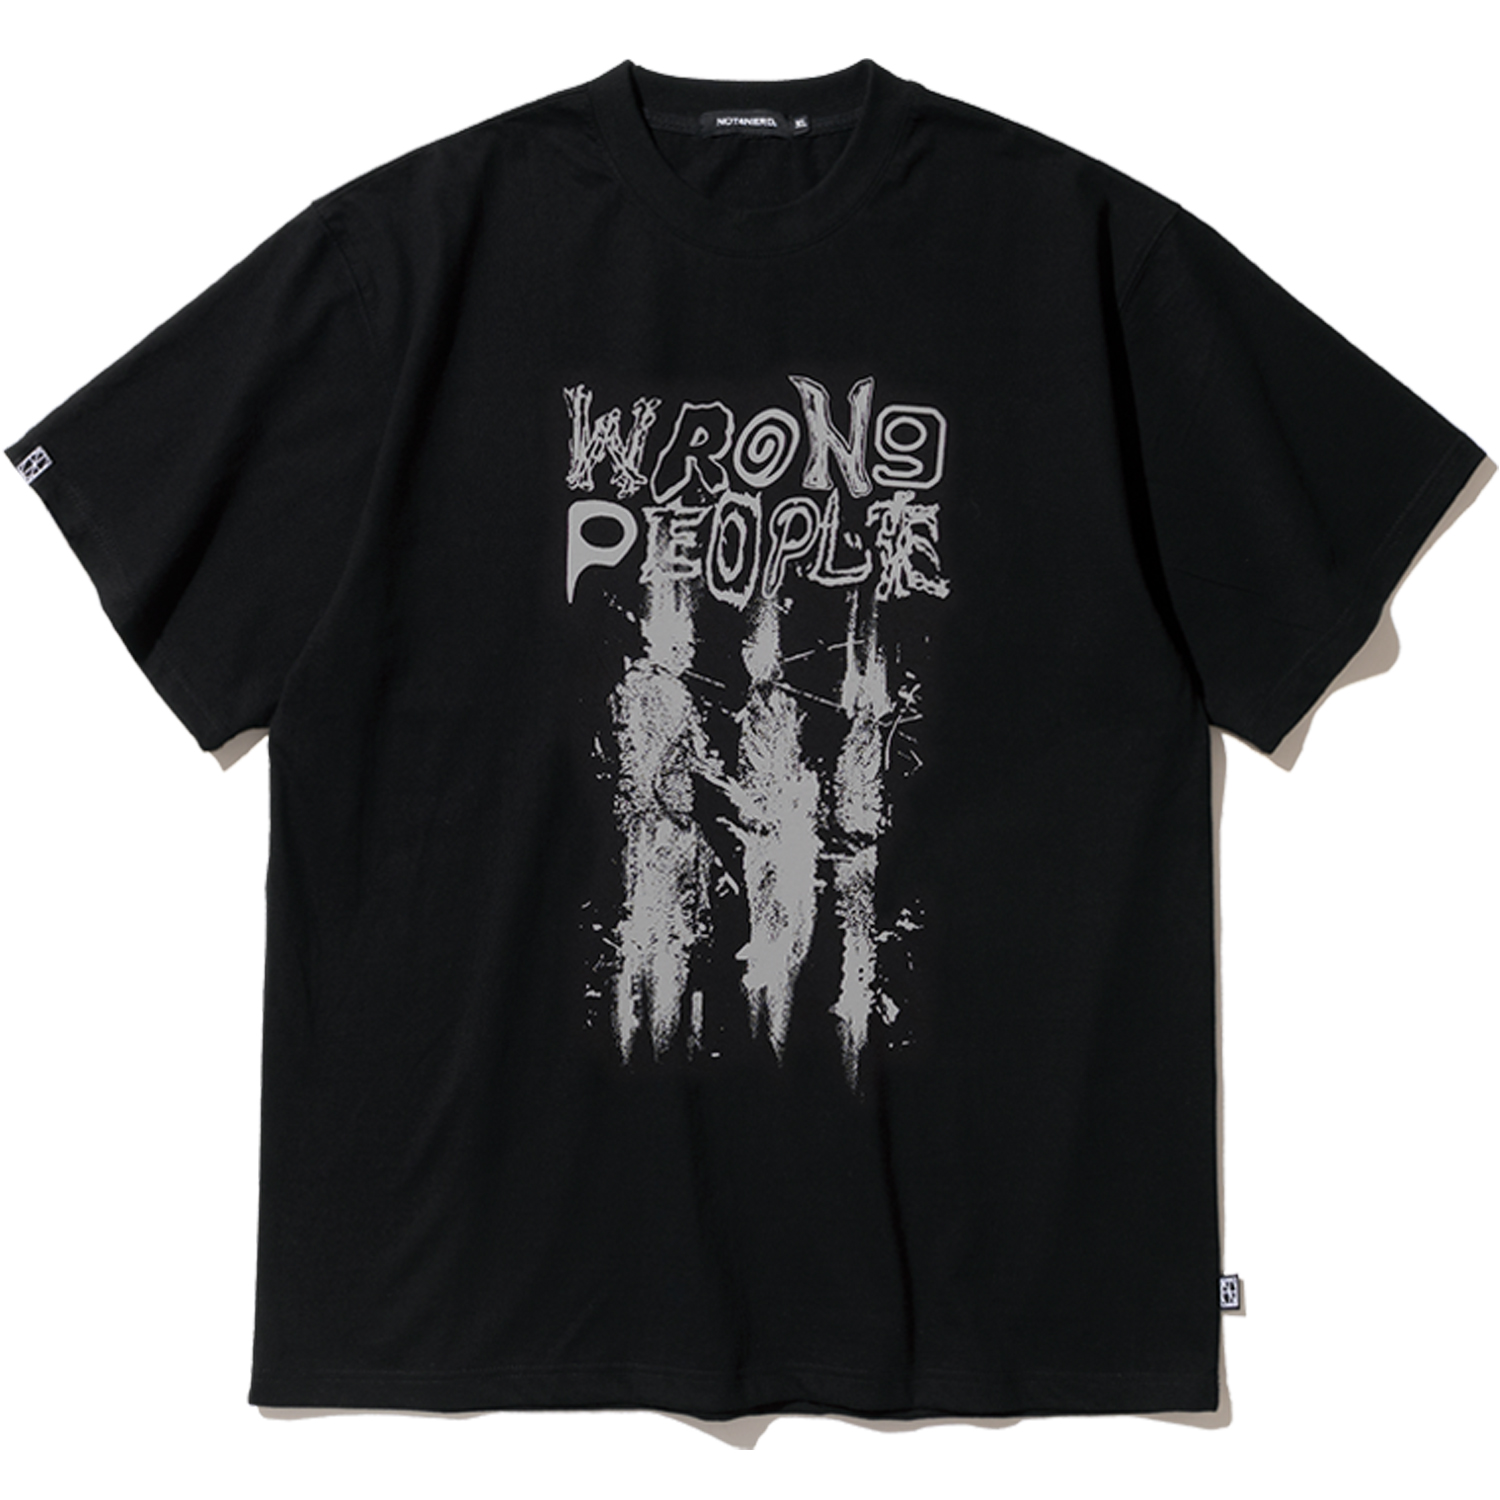 Wrong People T-Shirts - Black,NOT4NERD